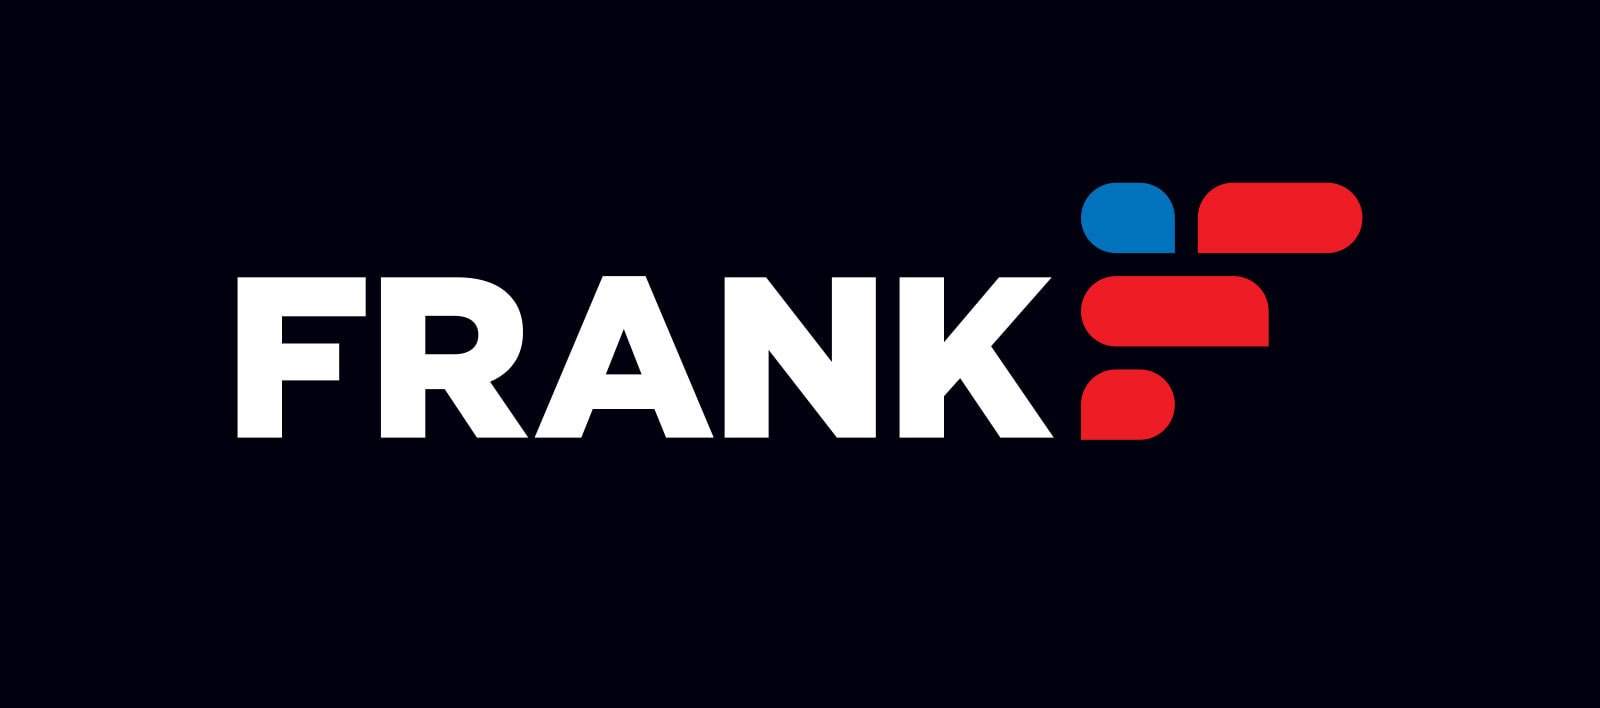 Frank Speech logo mike lindell